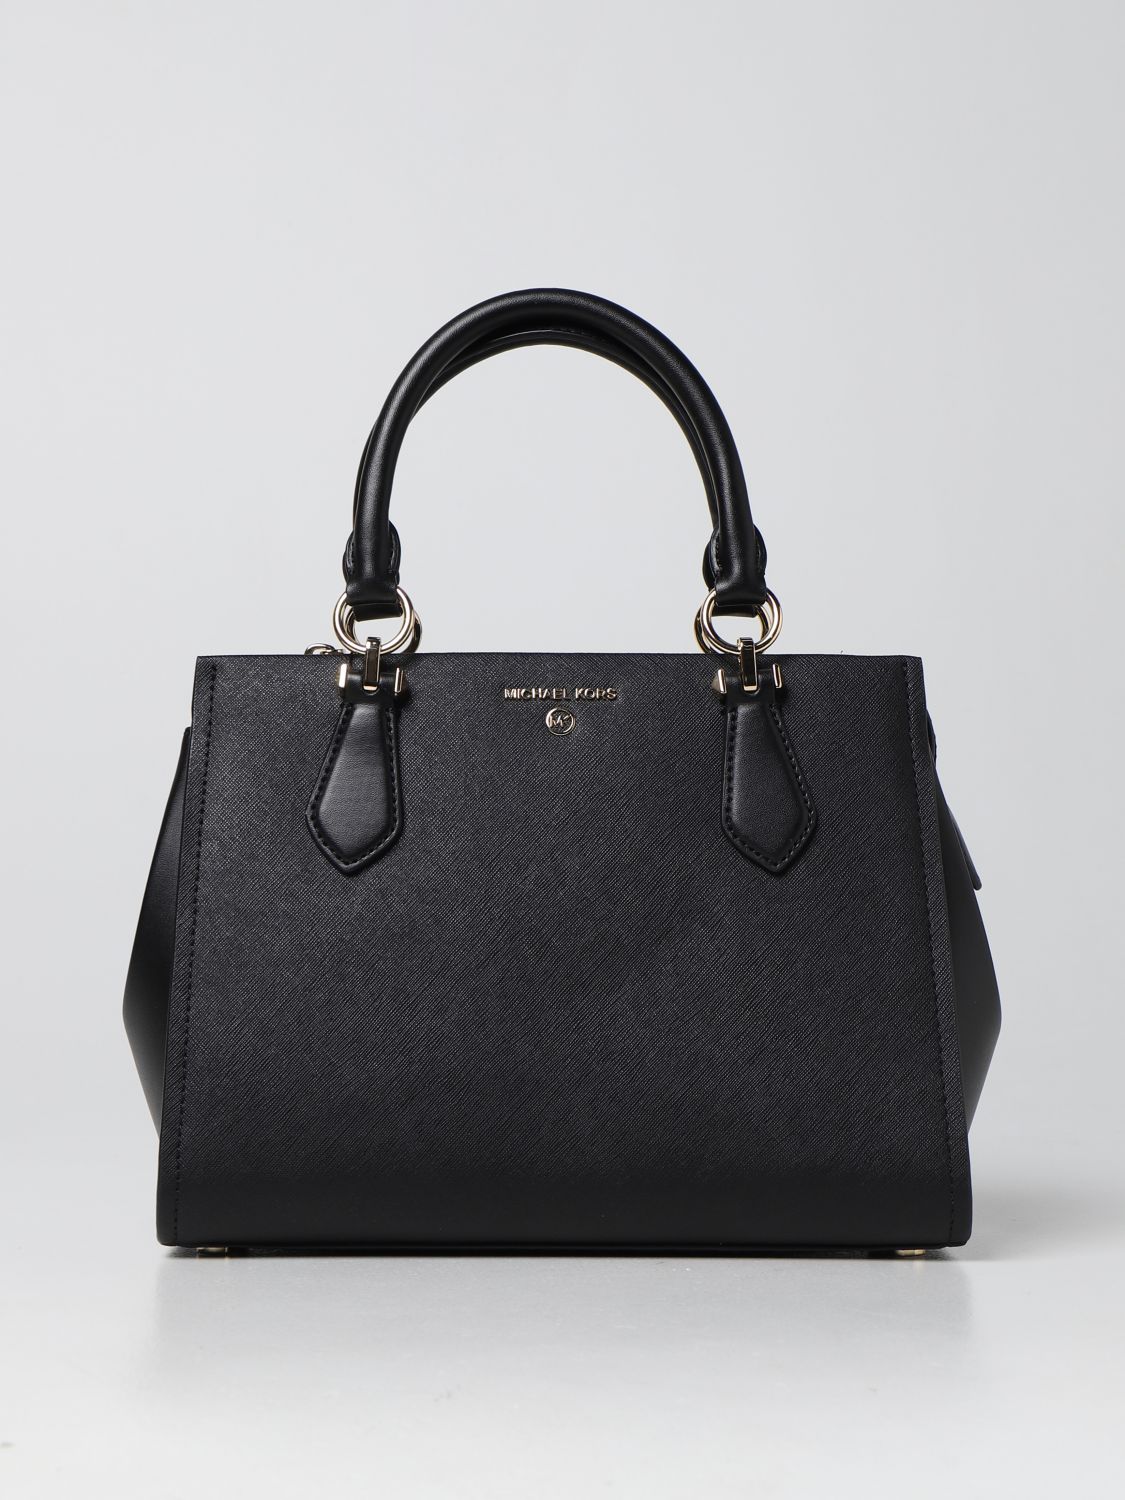 MICHAEL KORS: Marilyn Michael bag in saffiano leather - Black | Handbag ...